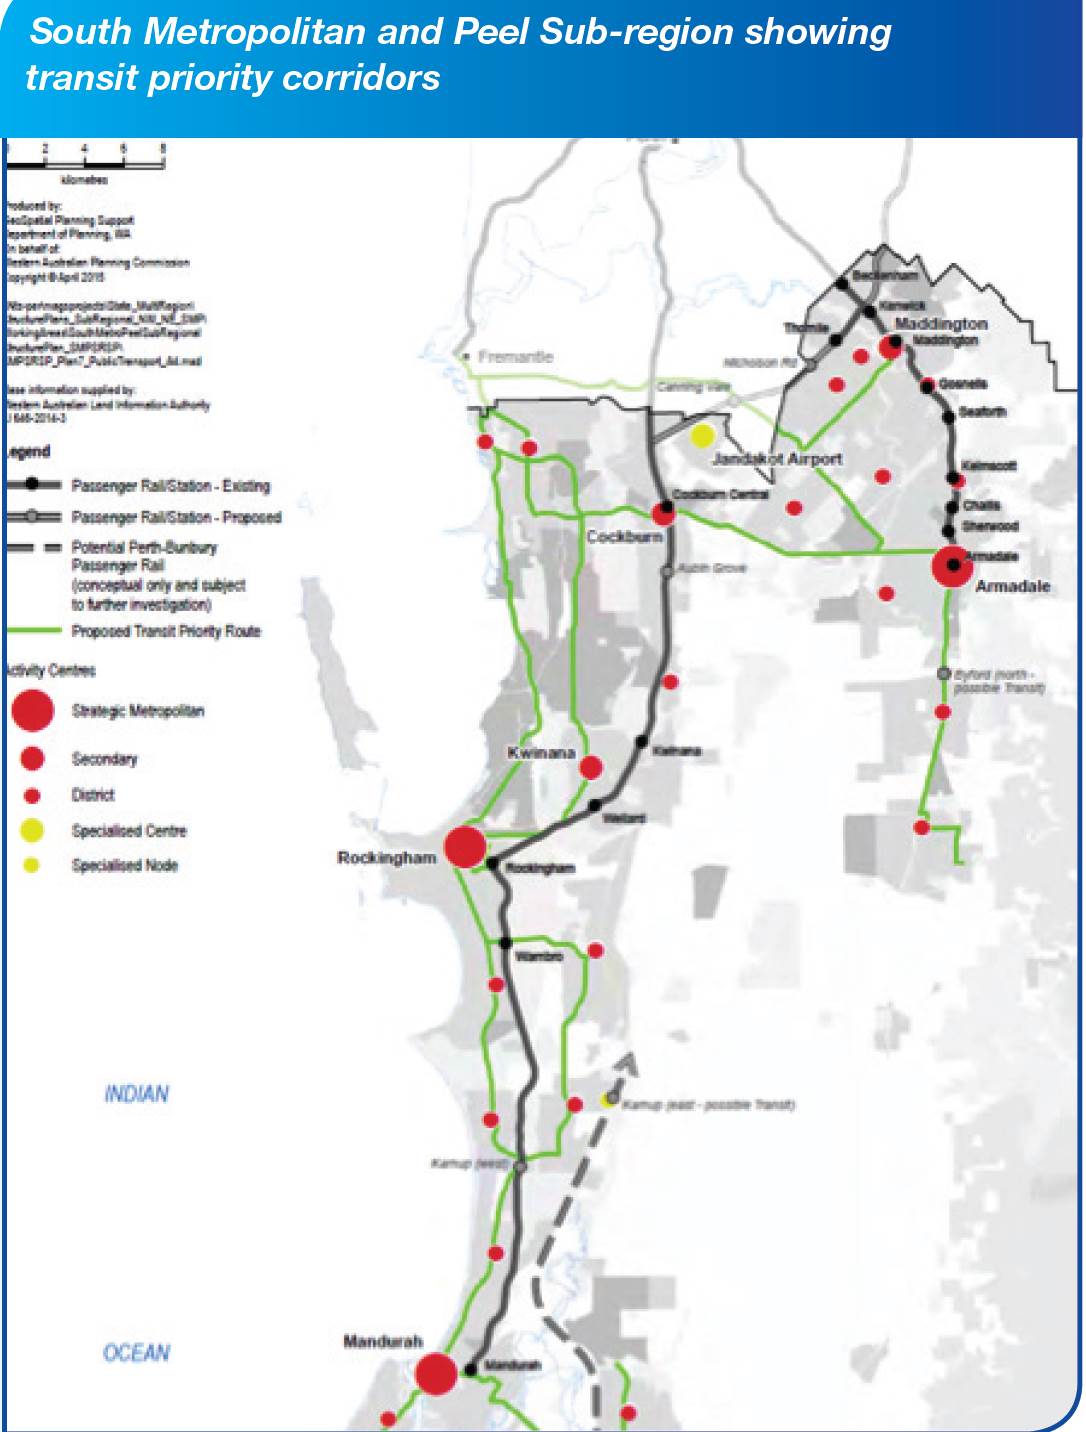 South Metro and Peel Sub-Region showing transit priority corridors